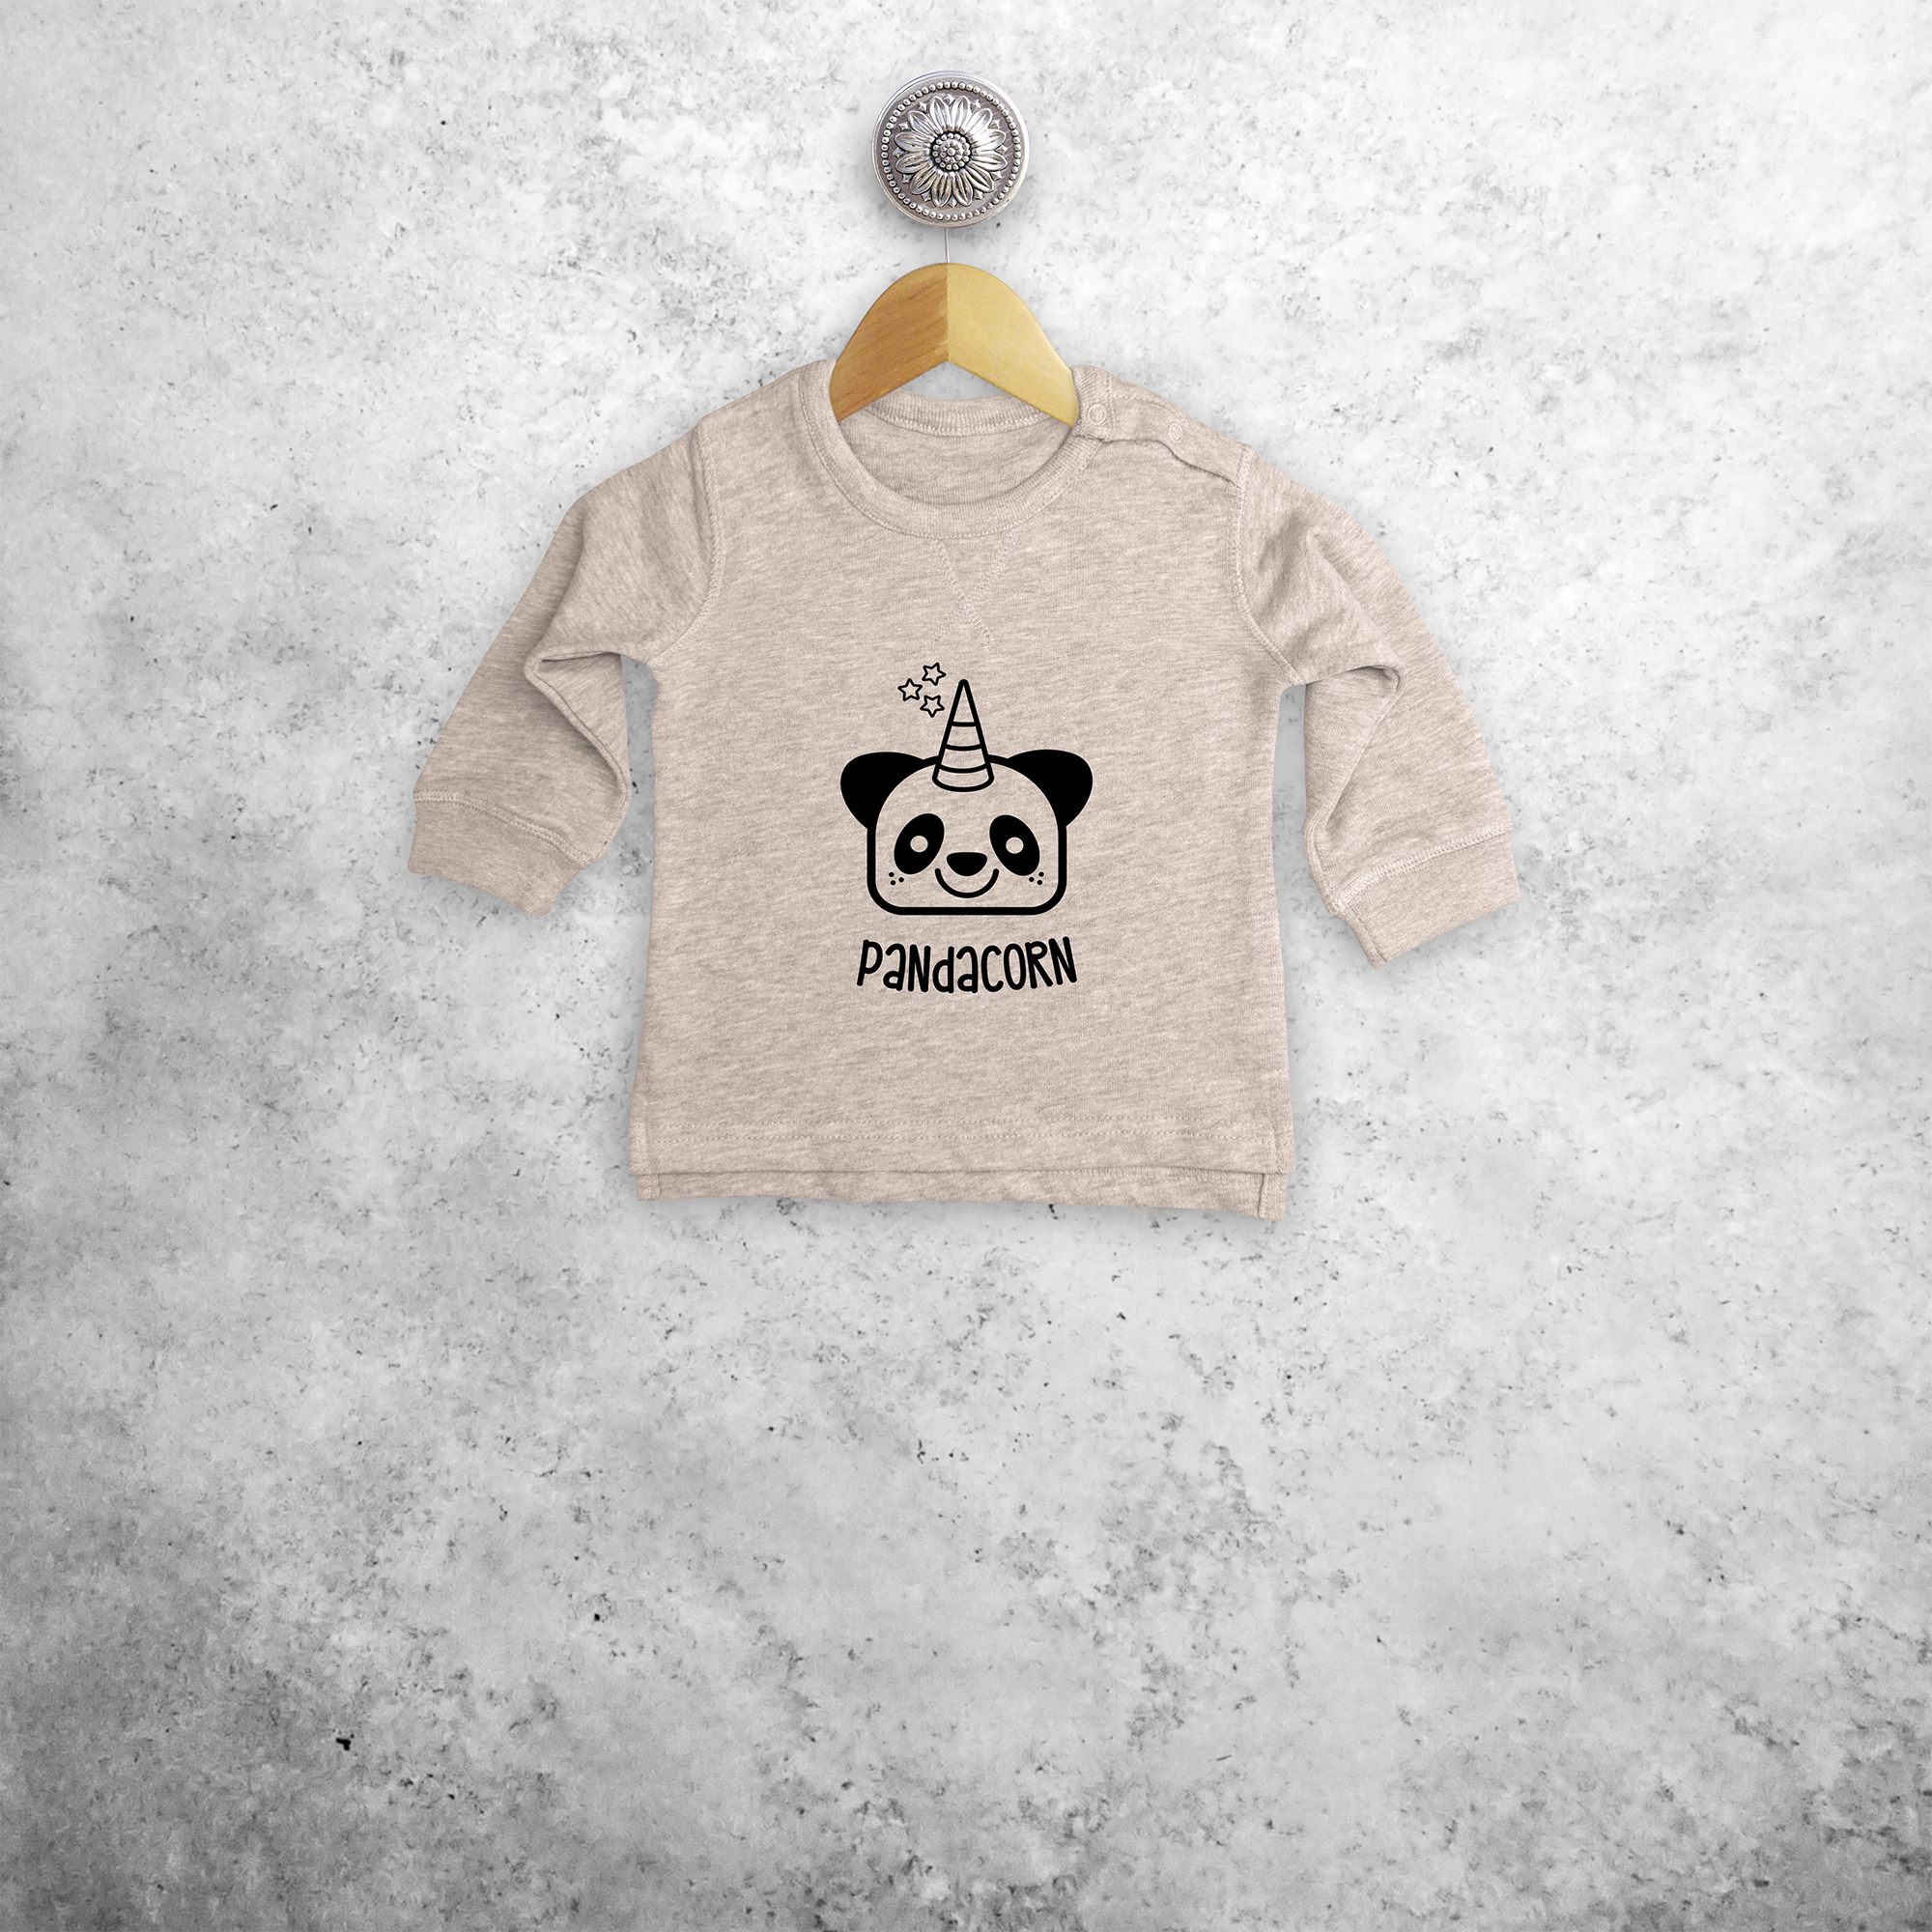 Pandacorn baby sweater